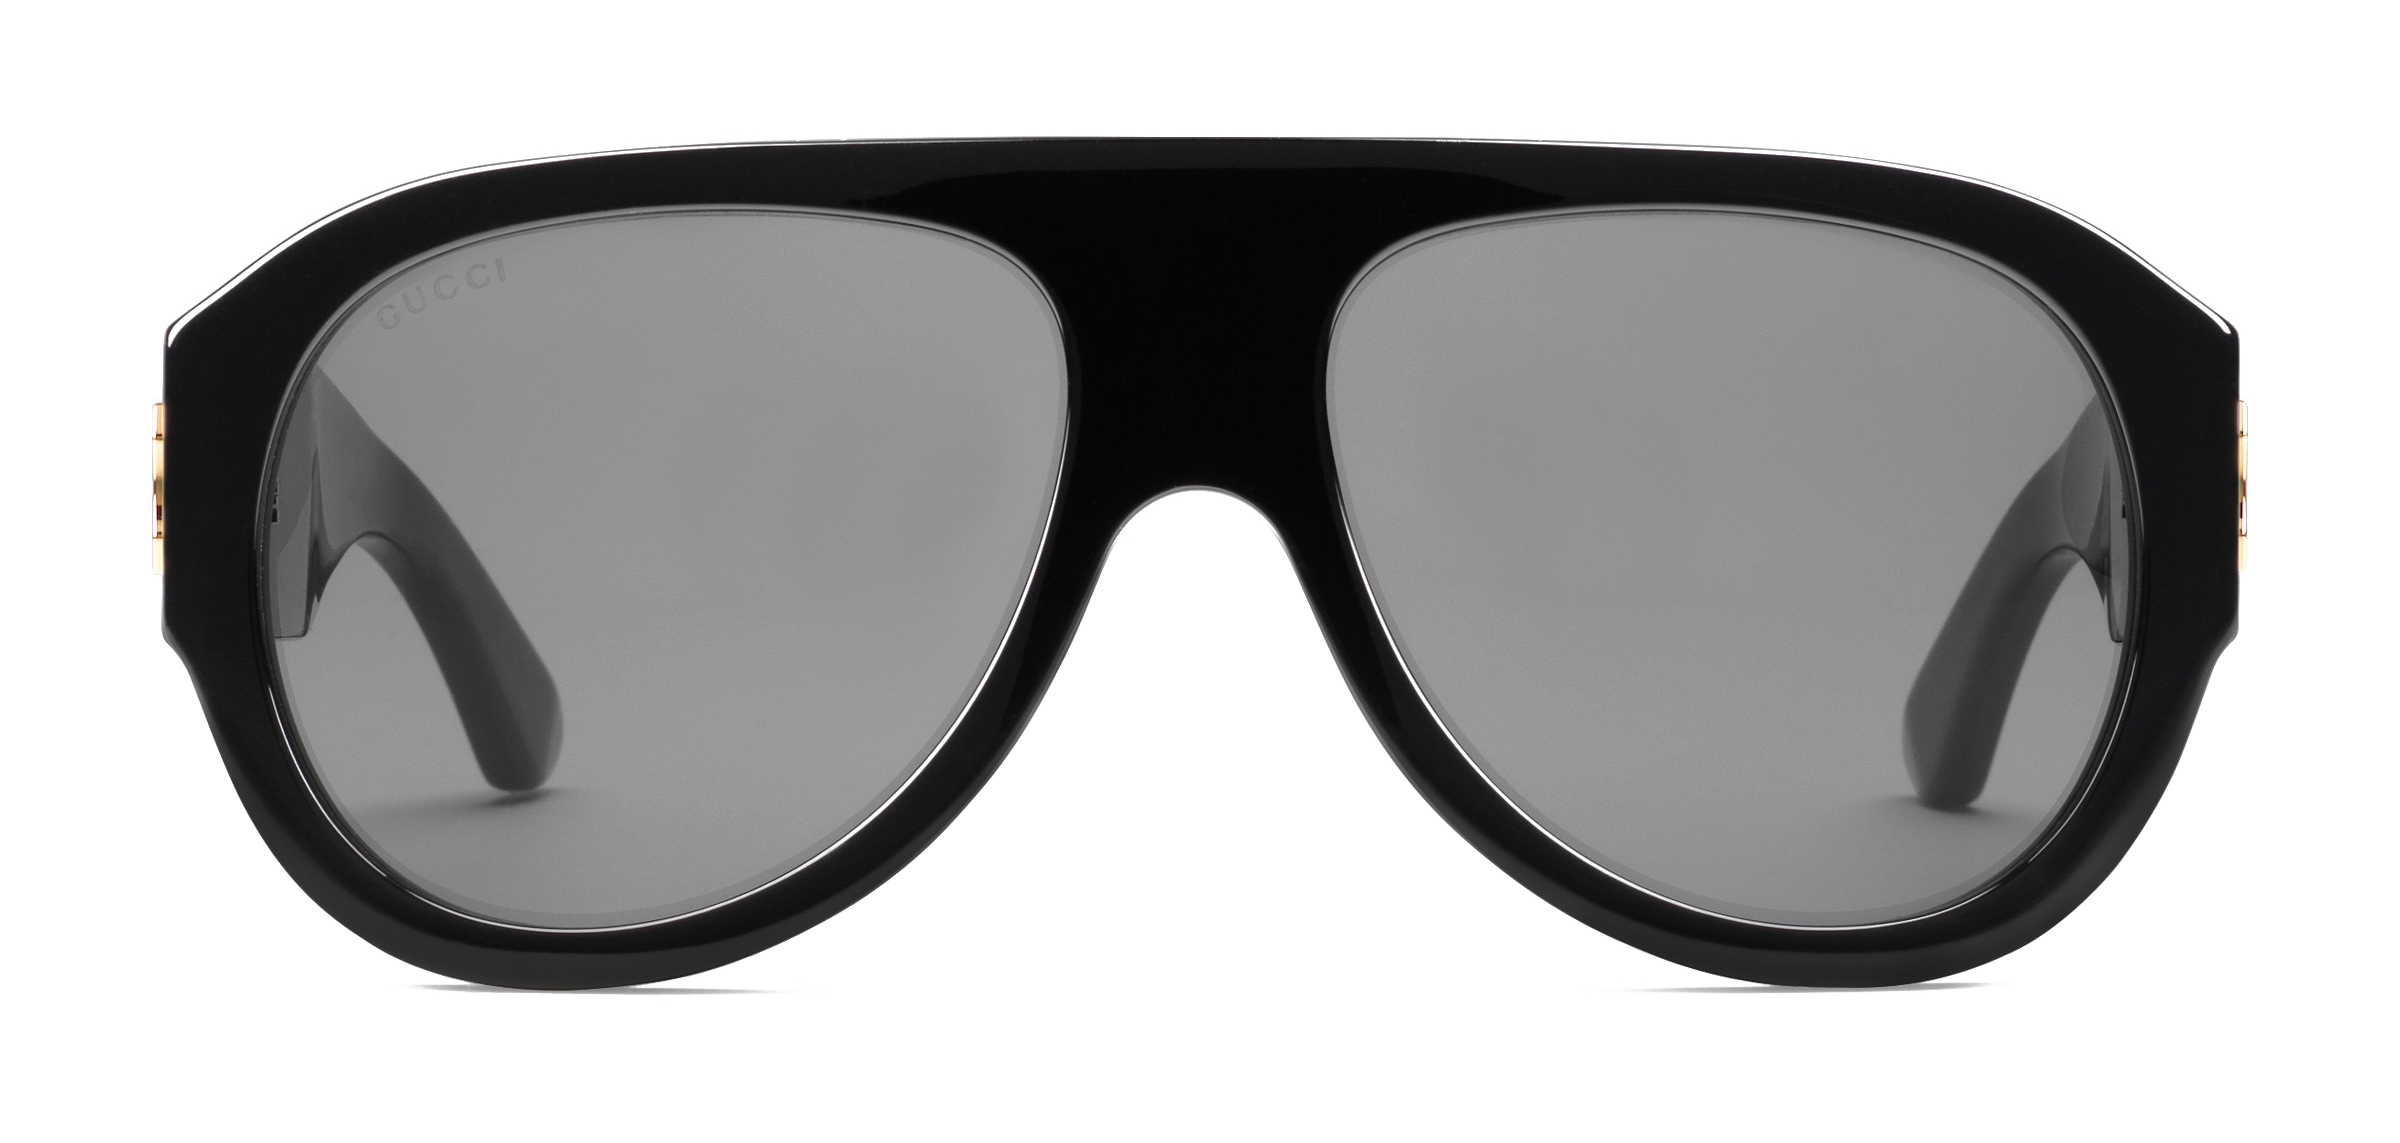 Gucci - Aviator Acetate Sunglasses - Black - Gucci Eyewear - Avvenice